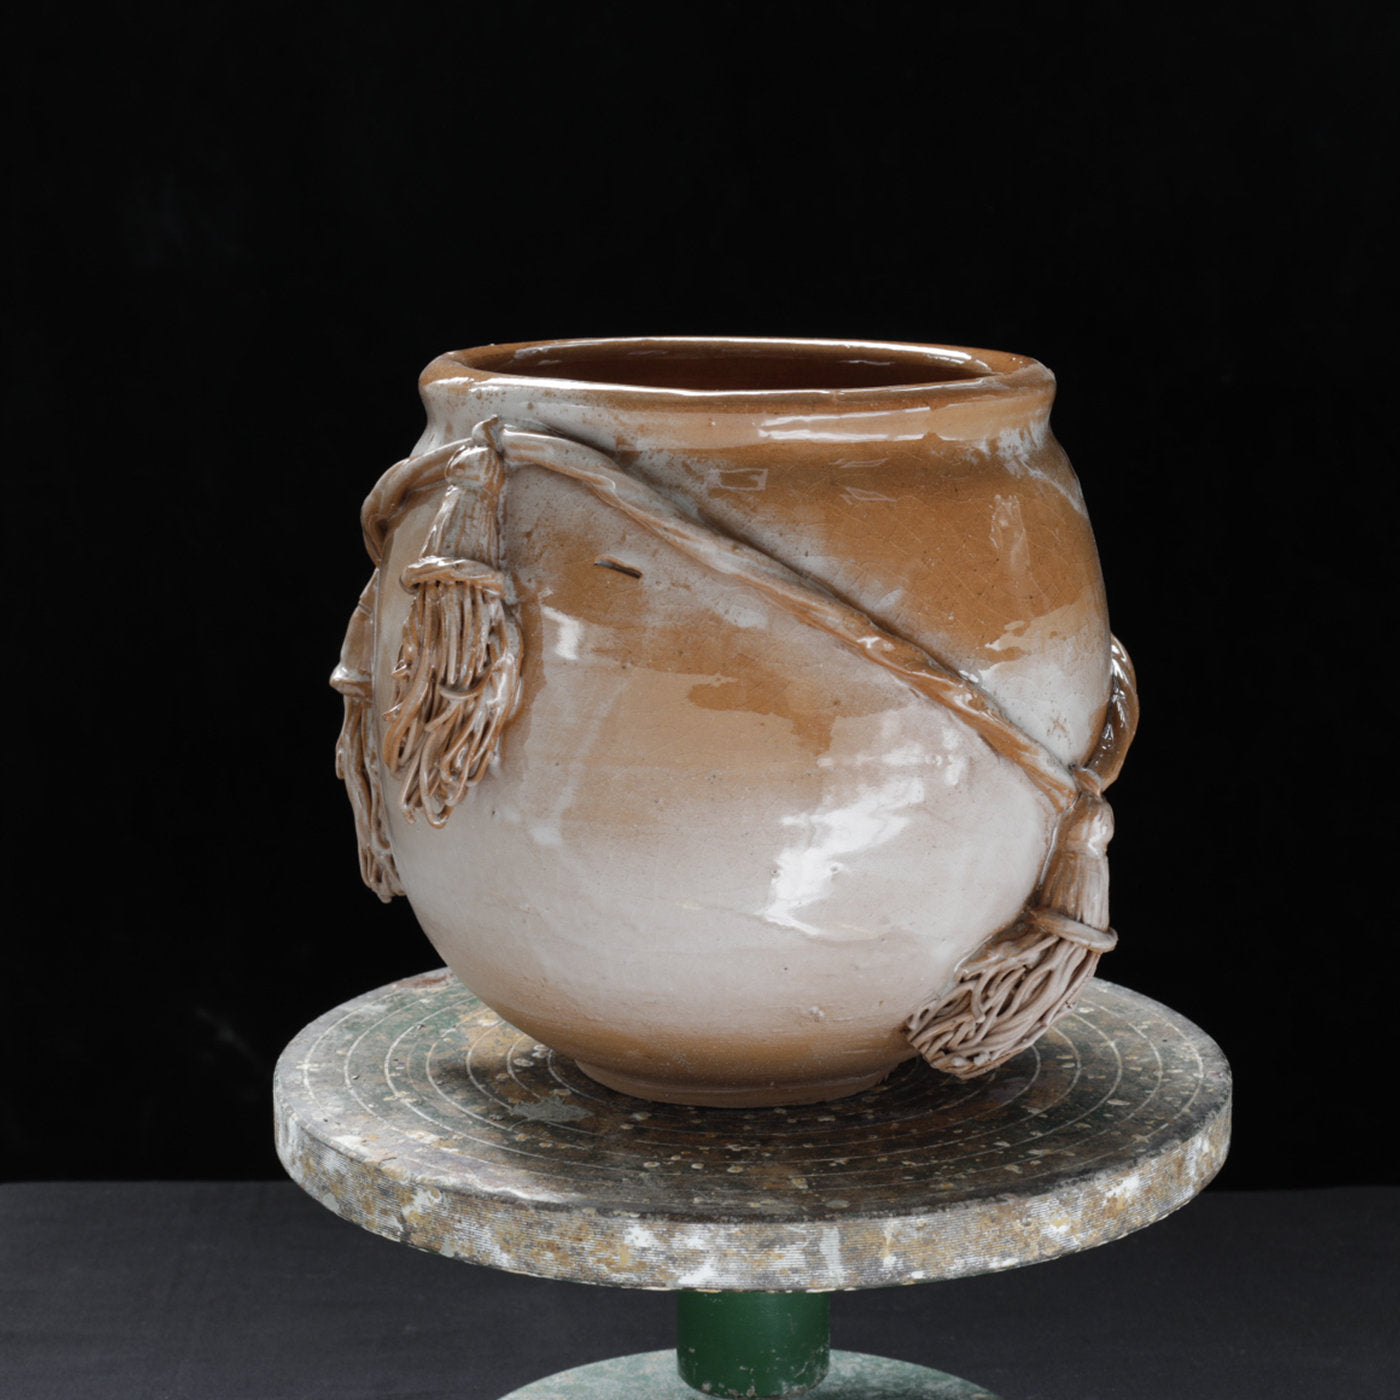 Vase With Tassels #2 - Alternative view 3